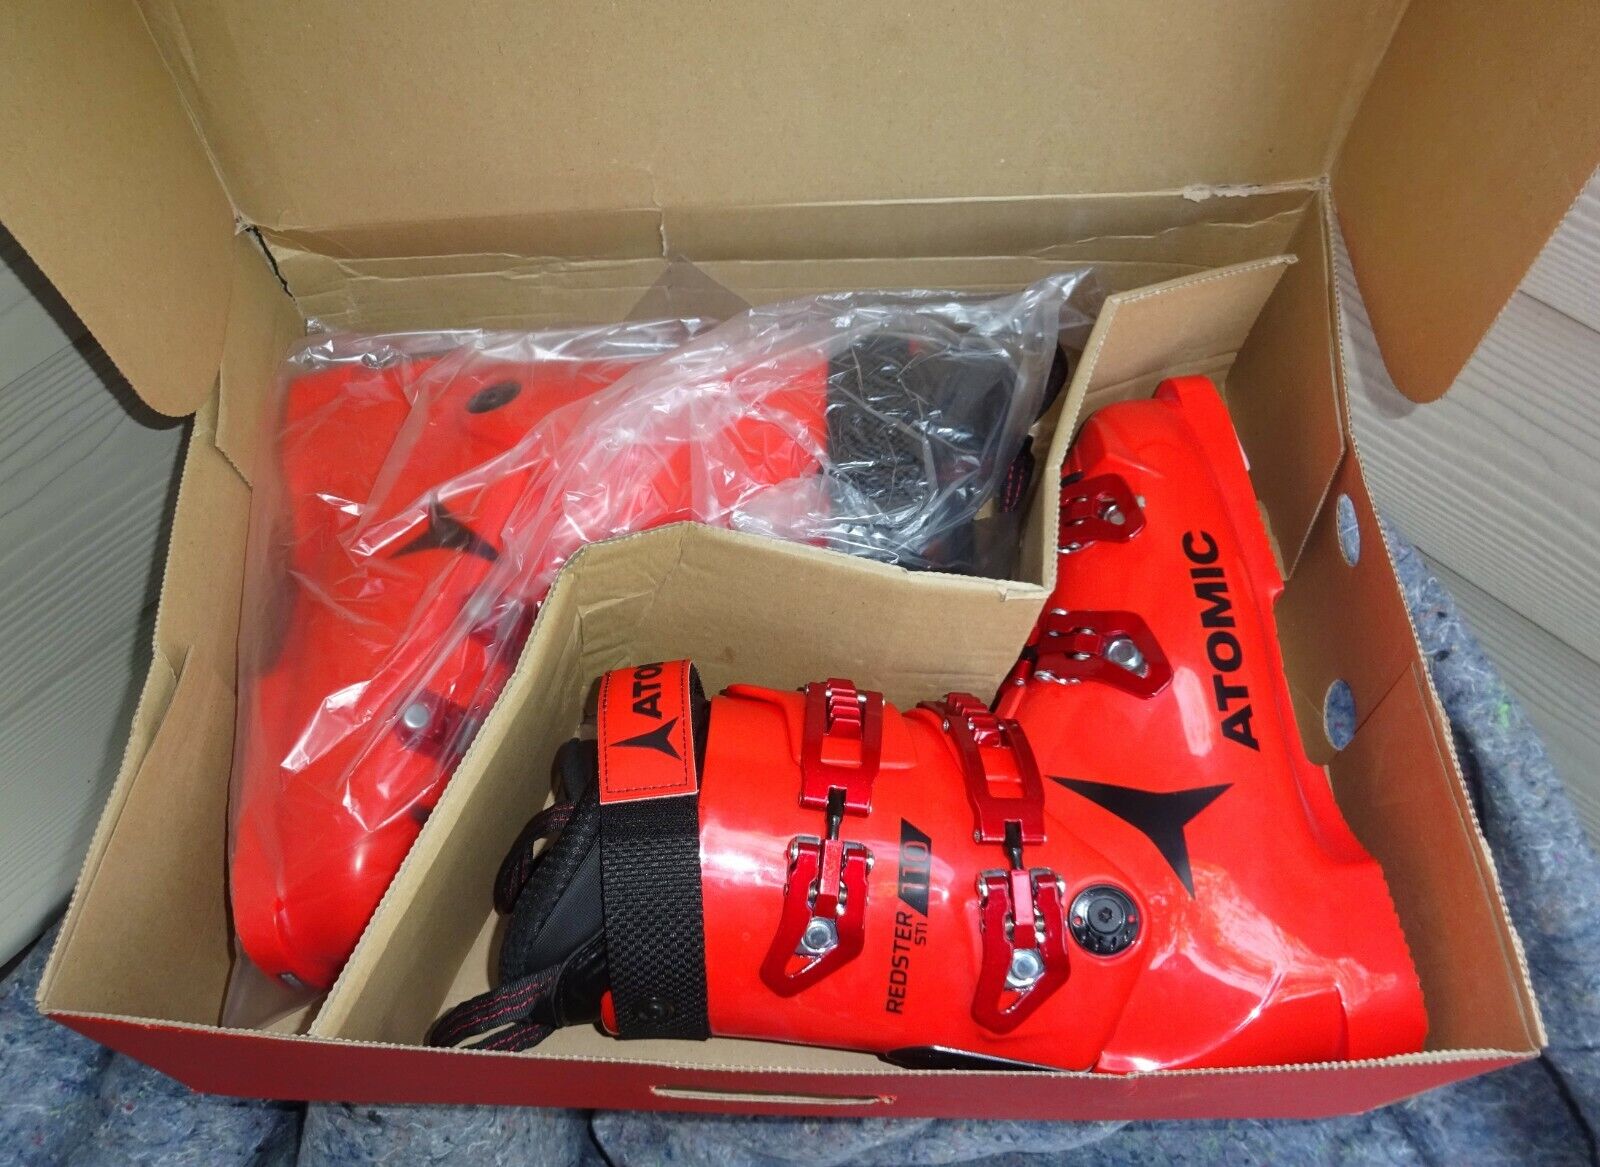 2022 Atomic Redster STI 110 Ski Boots NEW! Size 27.5